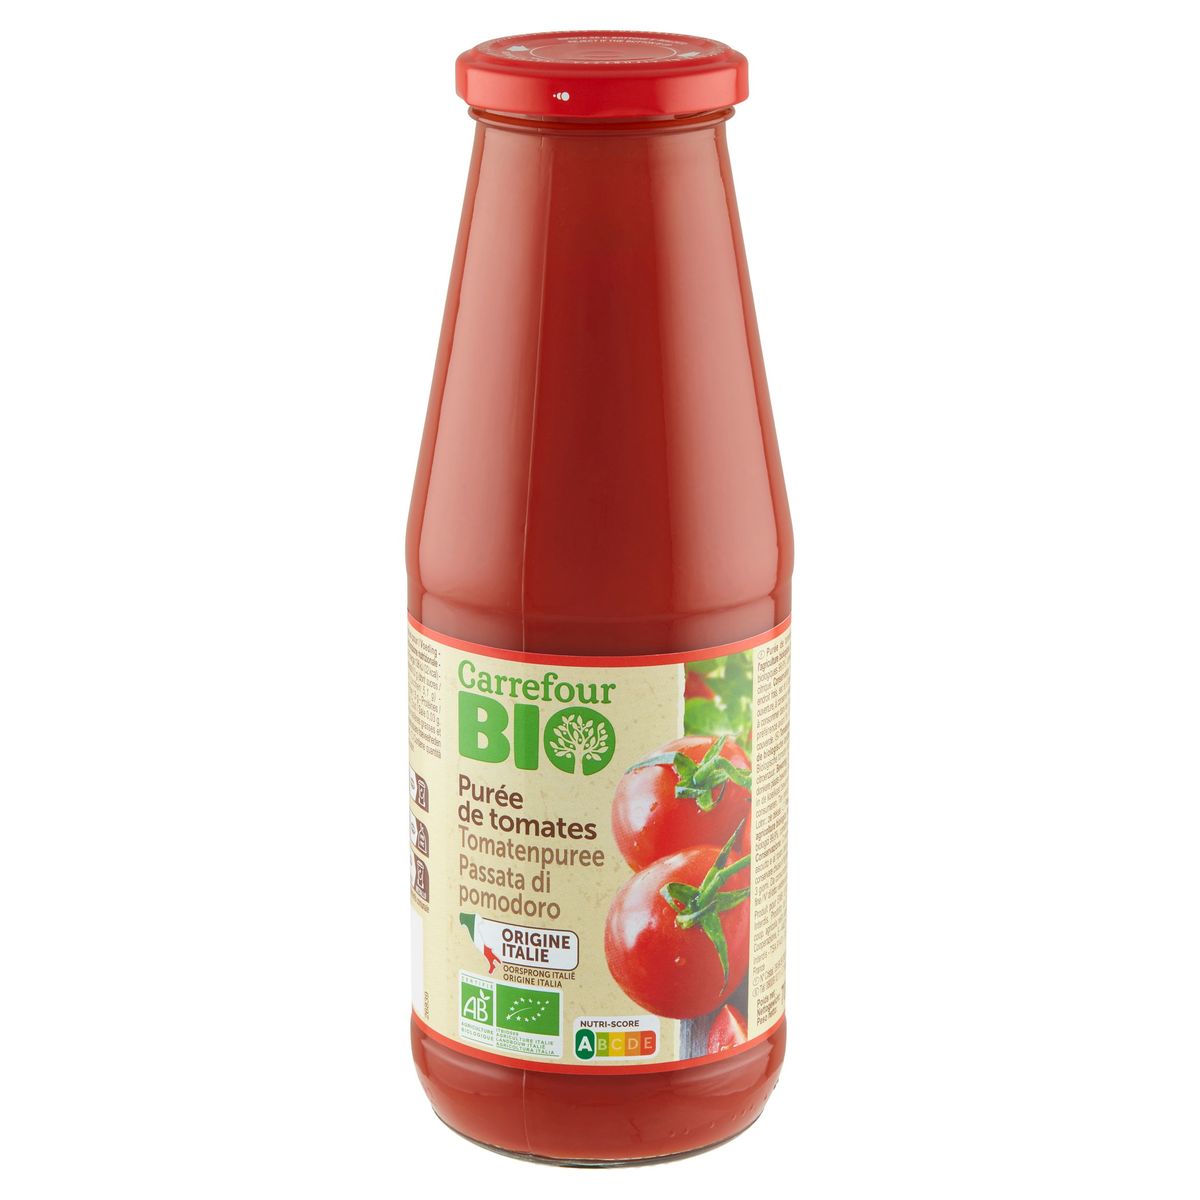 Carrefour Bio Tomatenpuree 700 g